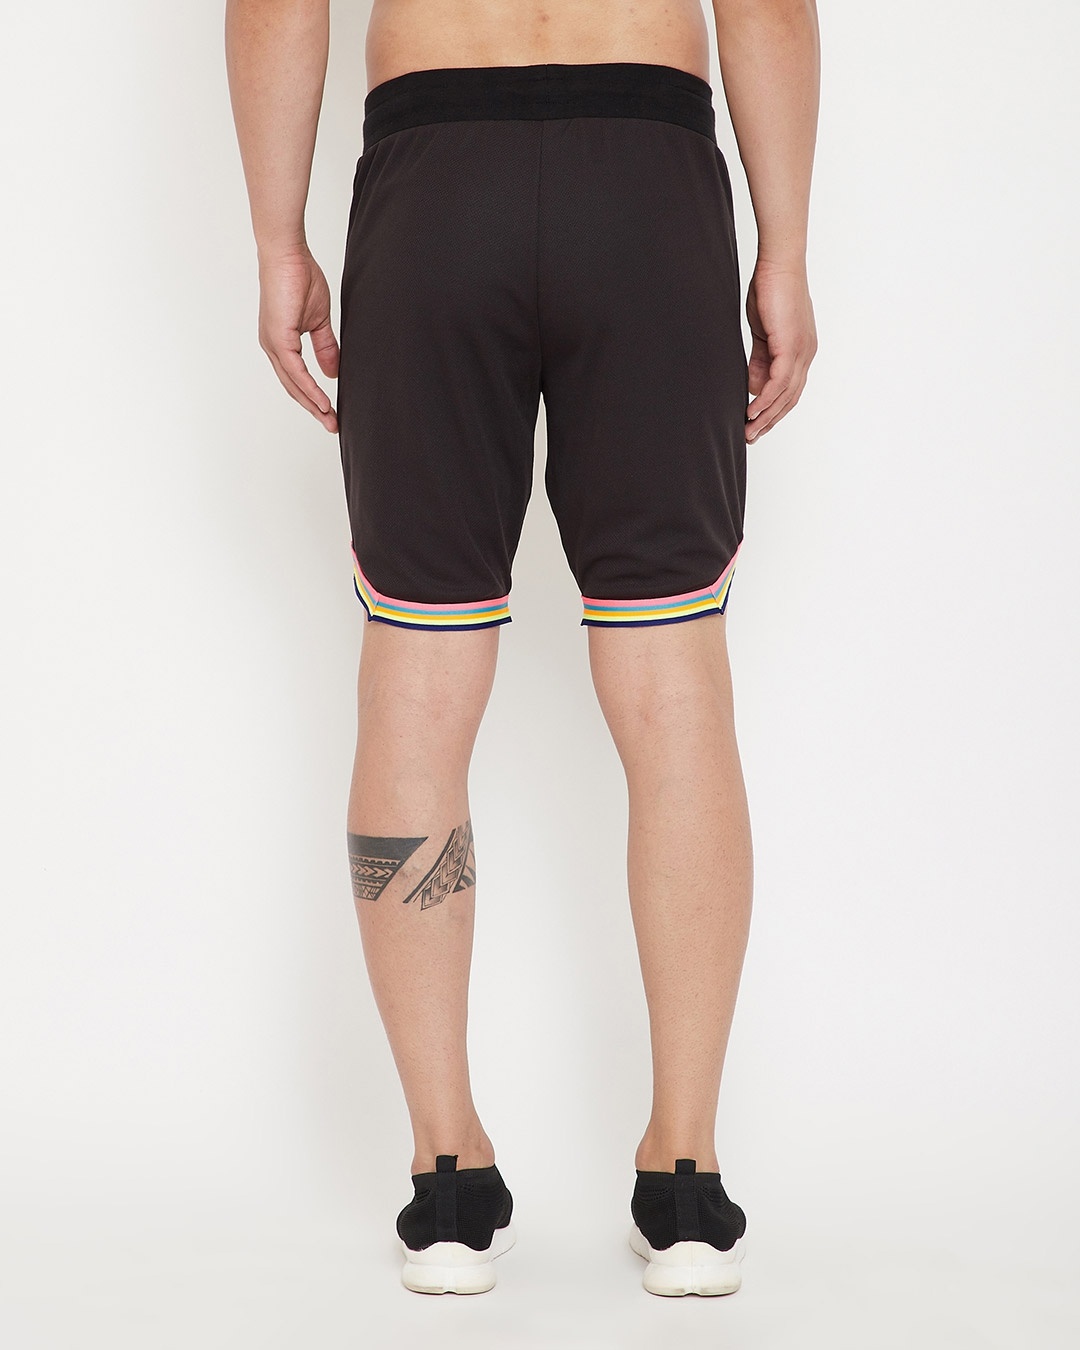 Shop Black Mesh Tattooed Rainbow Taped Shorts-Design